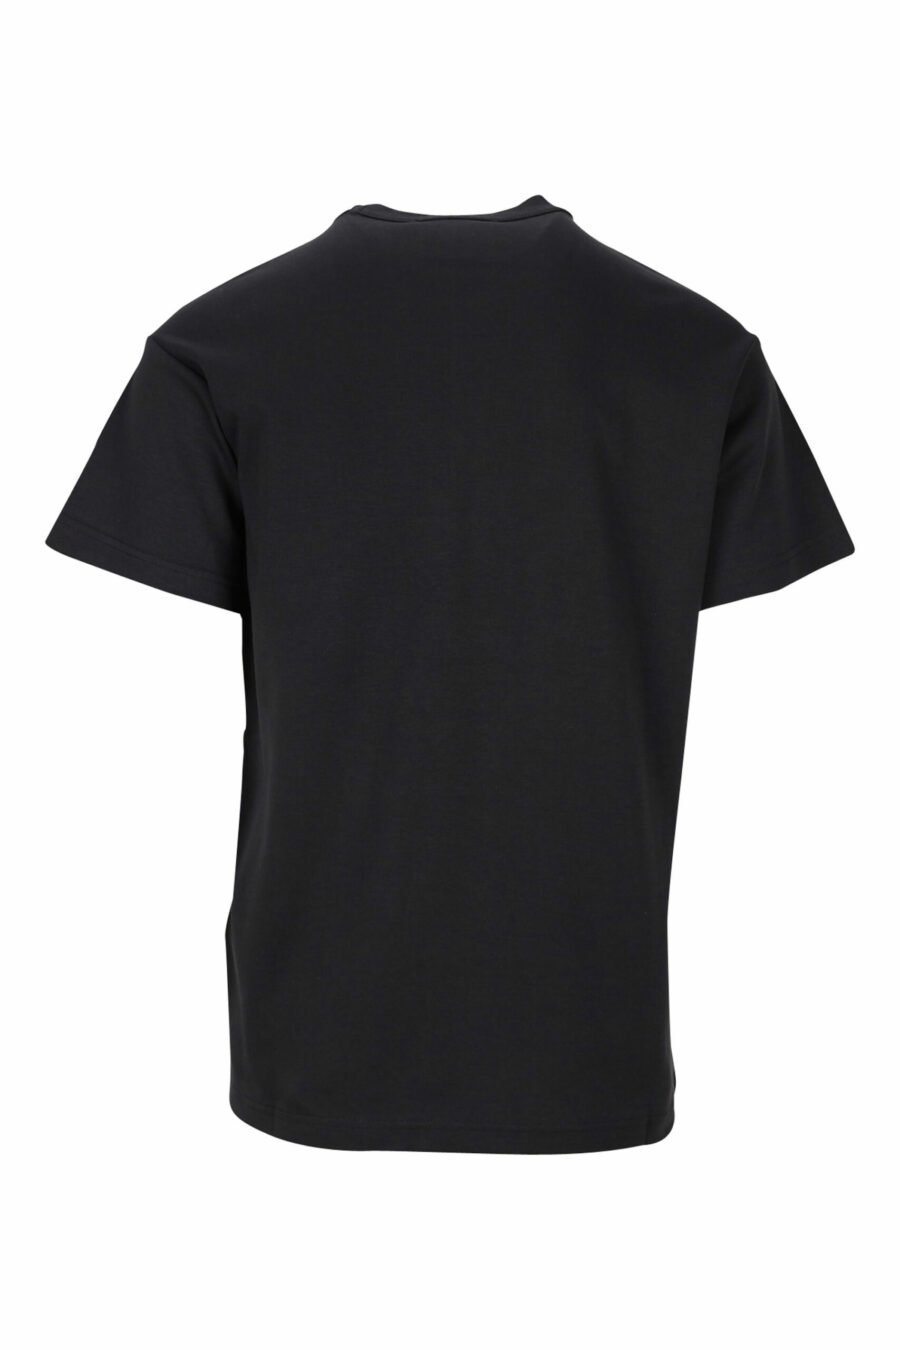 Camiseta negra con maxilogo gráfico "spry" - 8052019468816 1 scaled